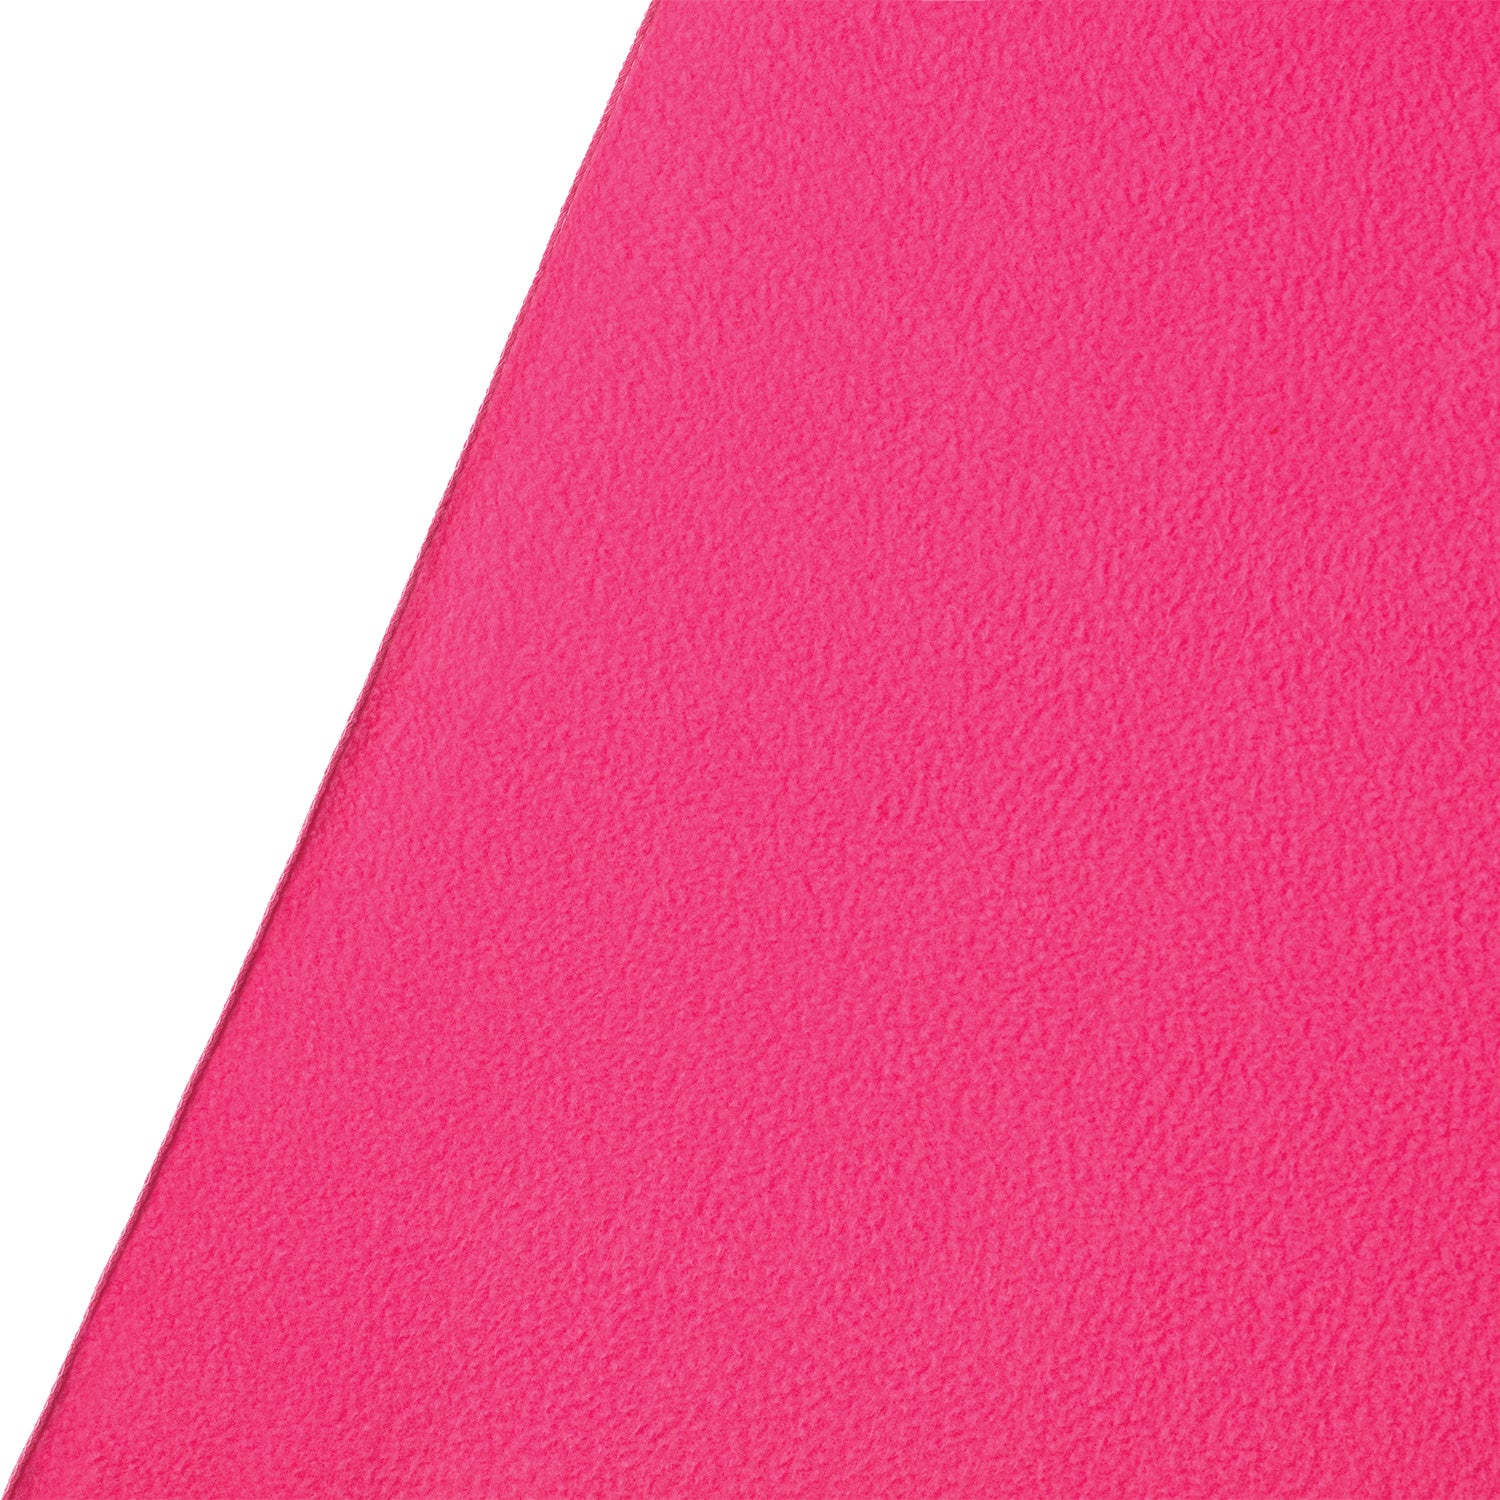 X-Drop Wrinkle-Resistant Backdrop - Dark Pink (5' x 7')